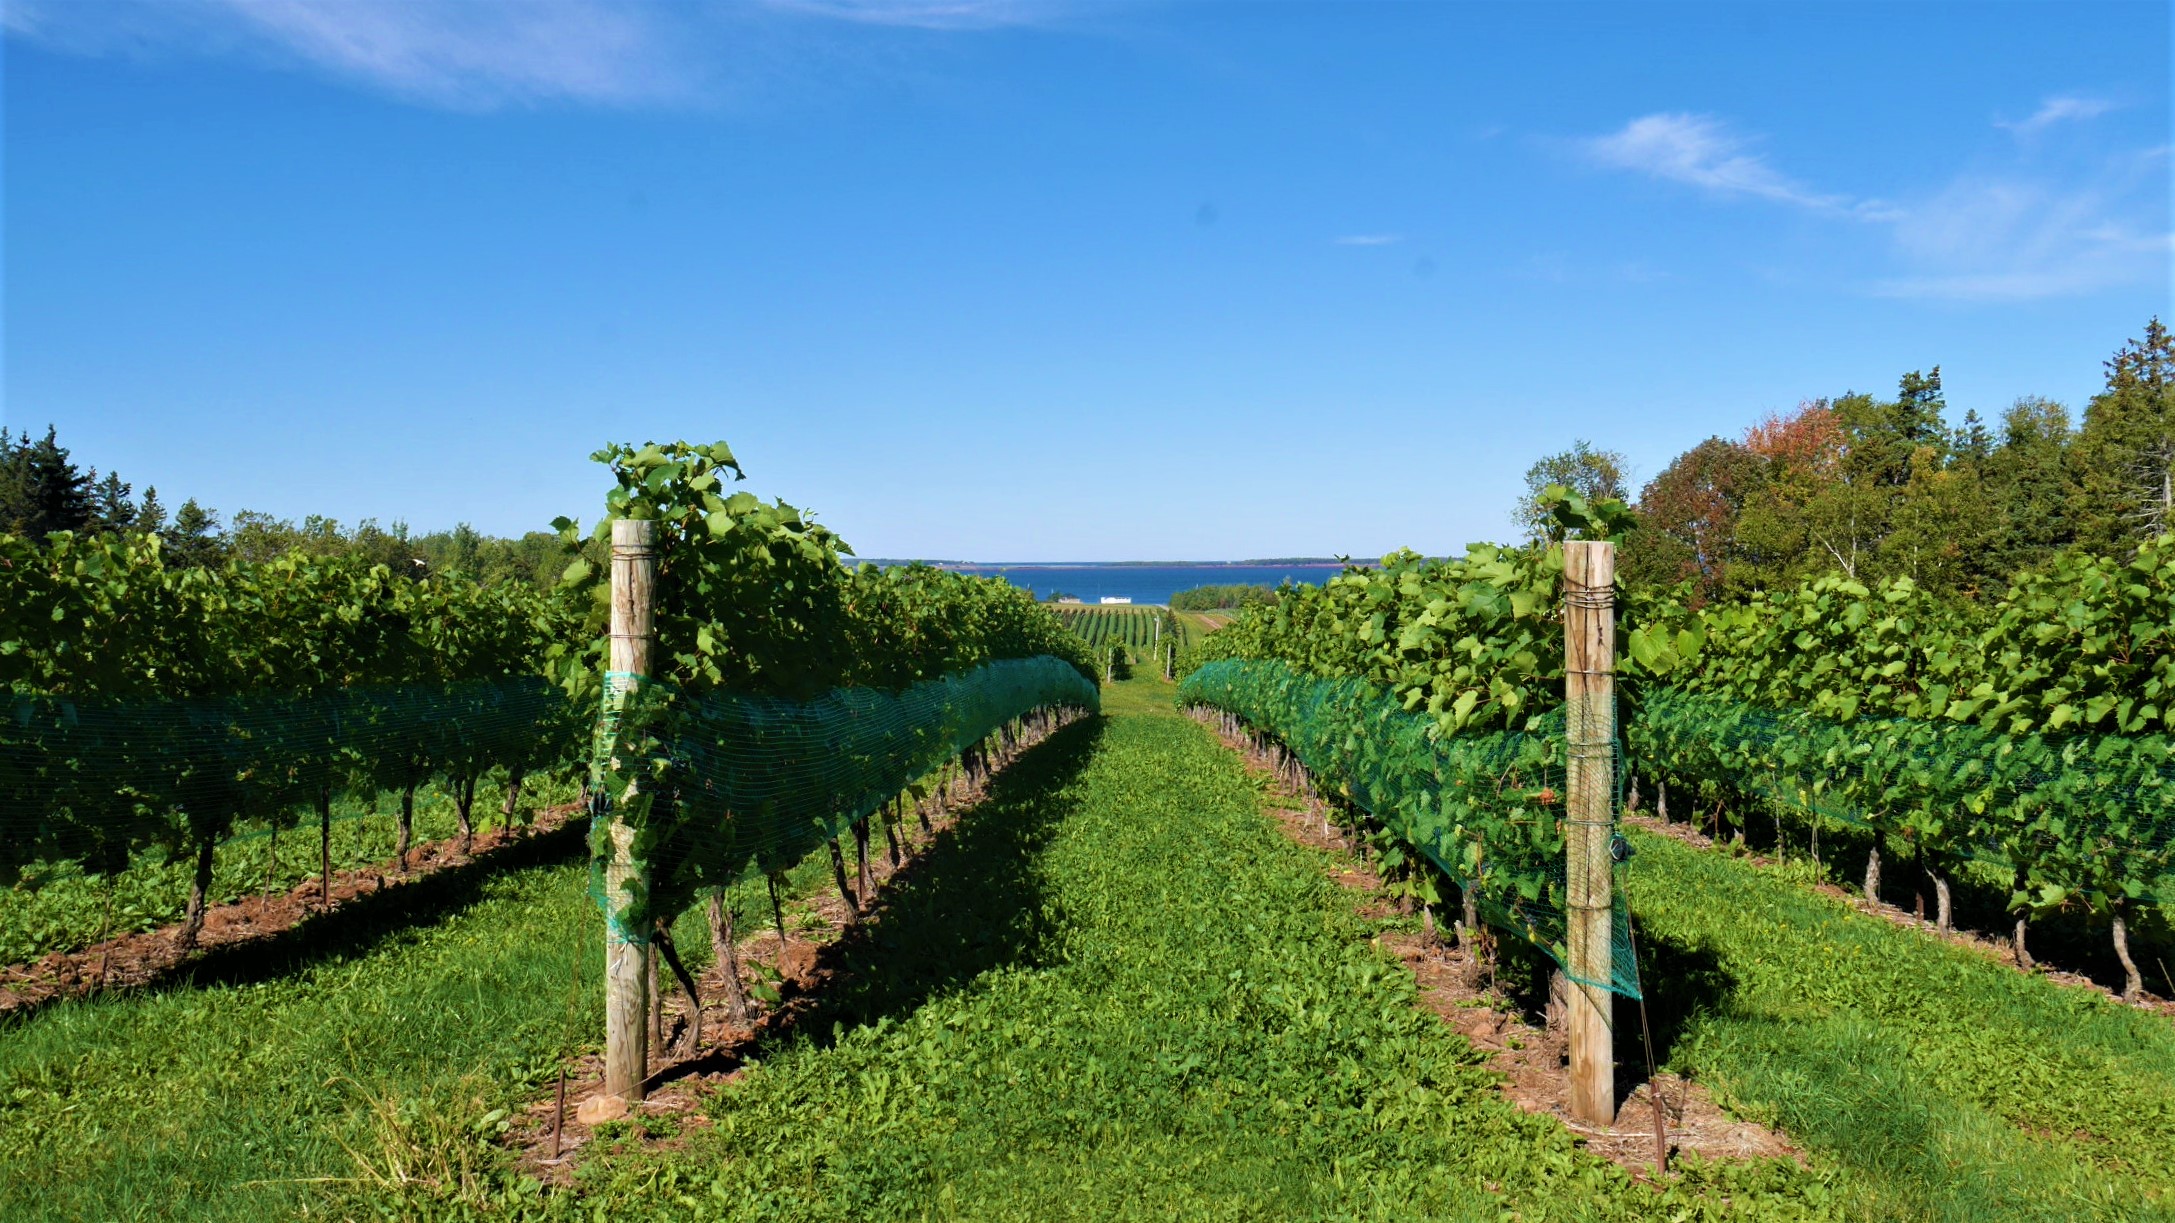 Jost vineyard detroit northumberland que voir road-trip canada